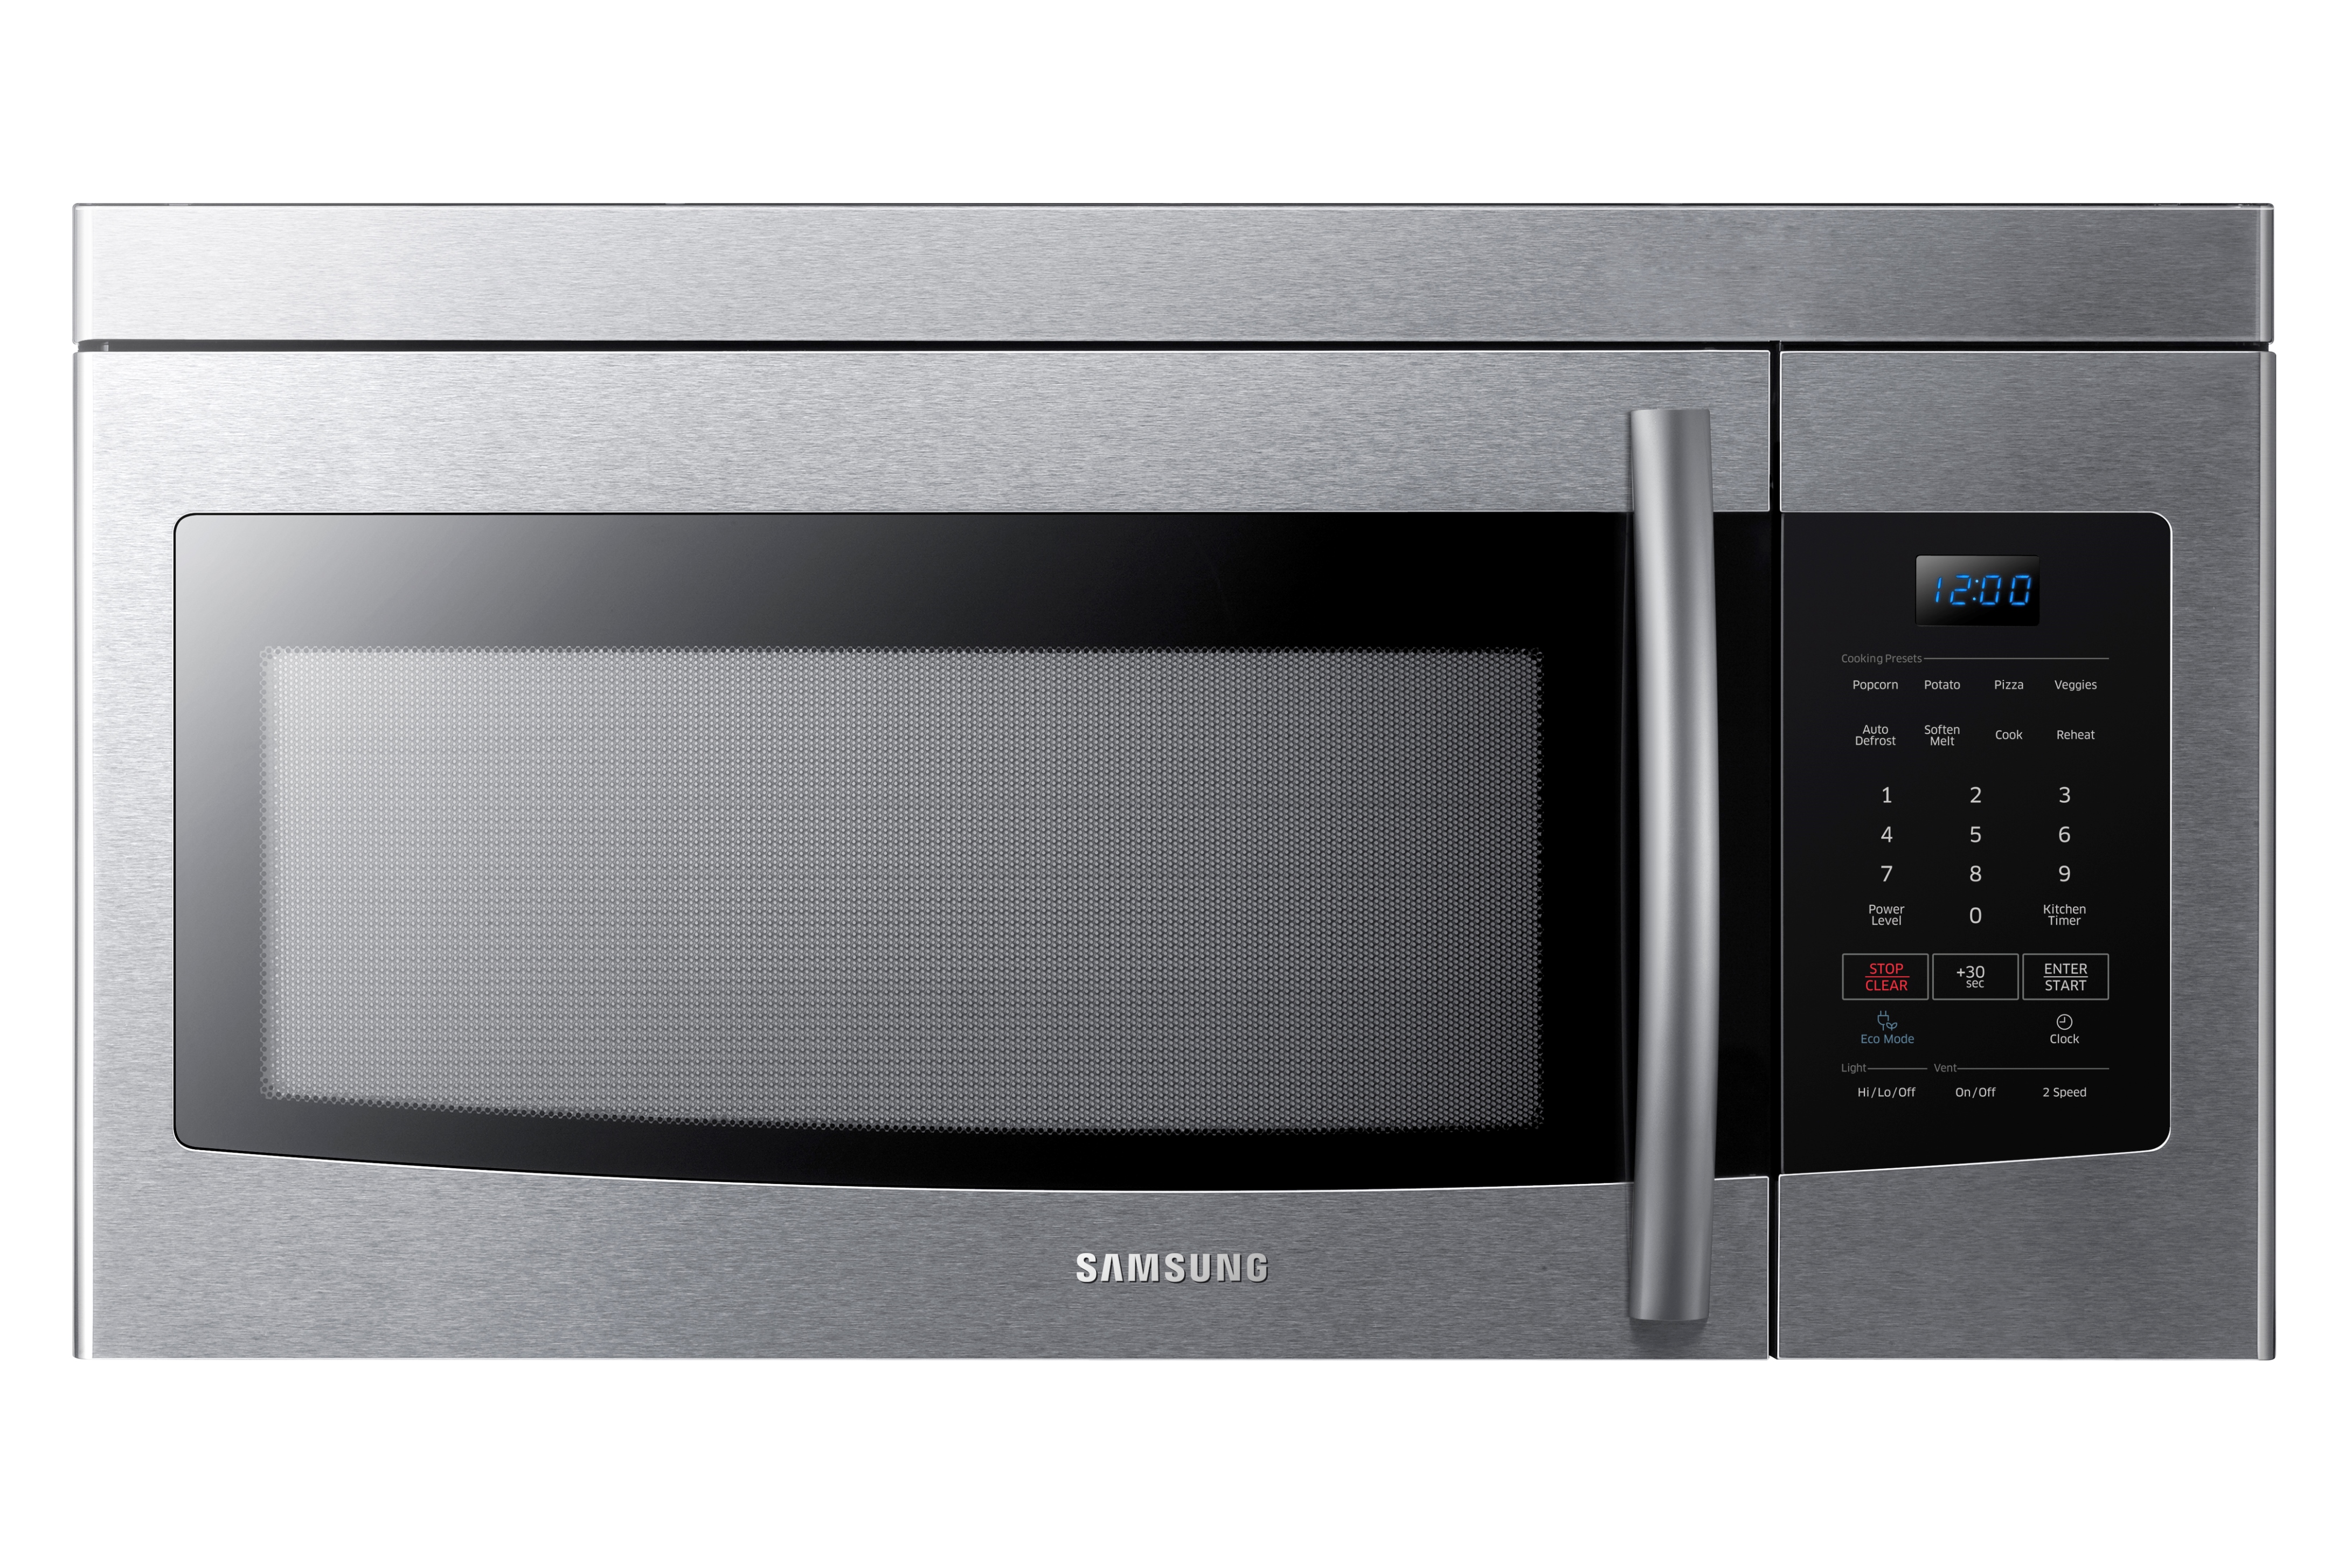 Samsung ME16K3000AS/AA 1.6 cu. ft. Over-the-Range Microwave - Stainless Samsung Stainless Steel Microwave Over The Range